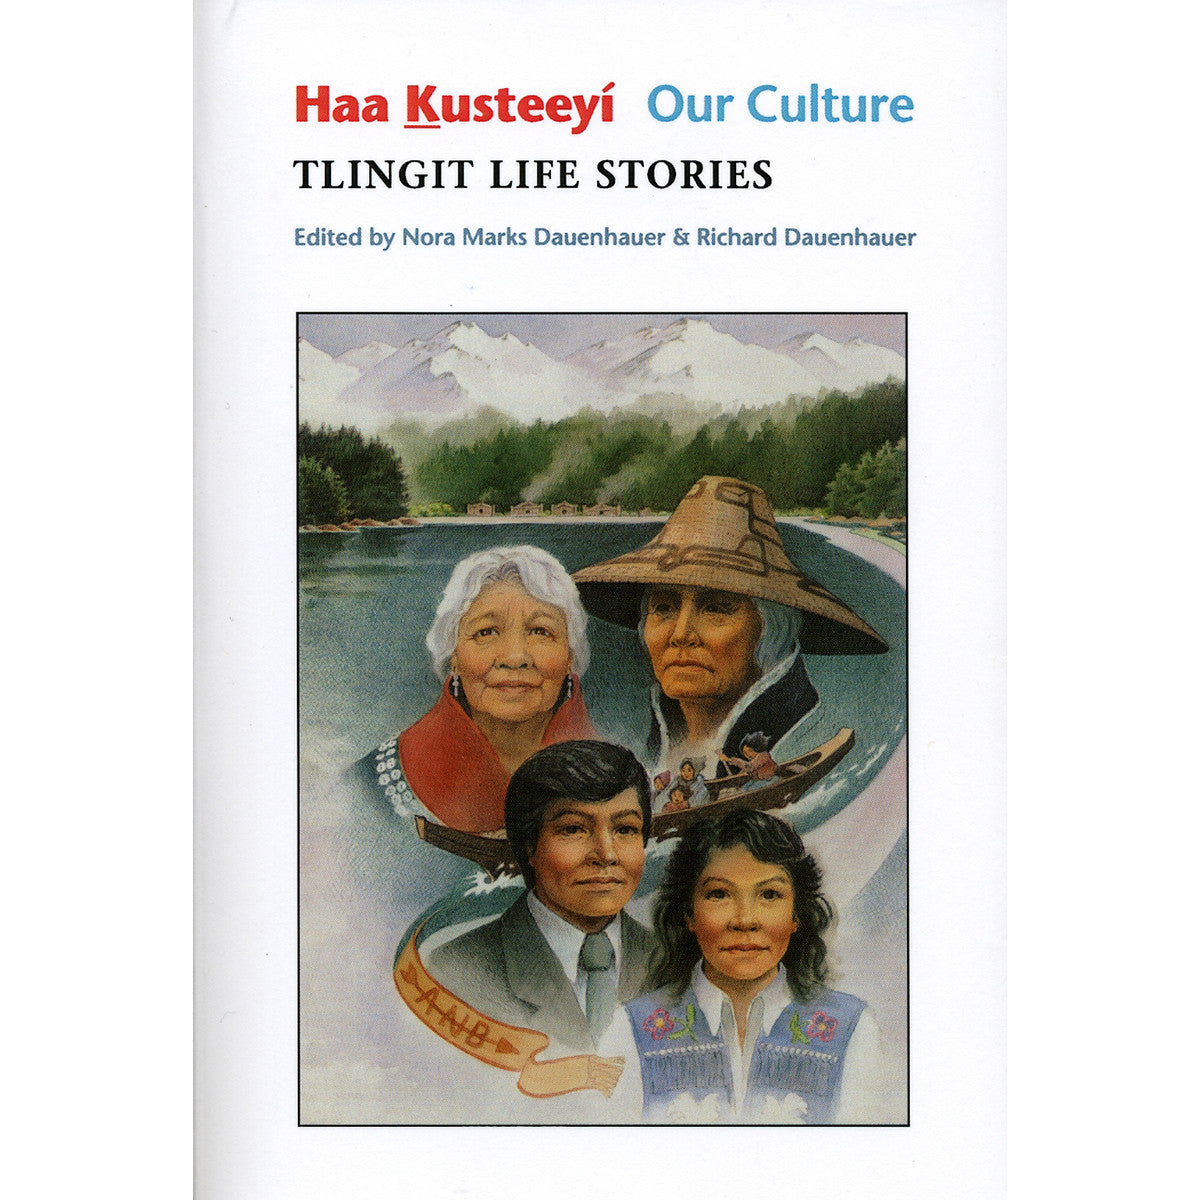 Book - "Haa Kusteeyi, Our Culture: Tlingit Life Stories", Dauenhauer